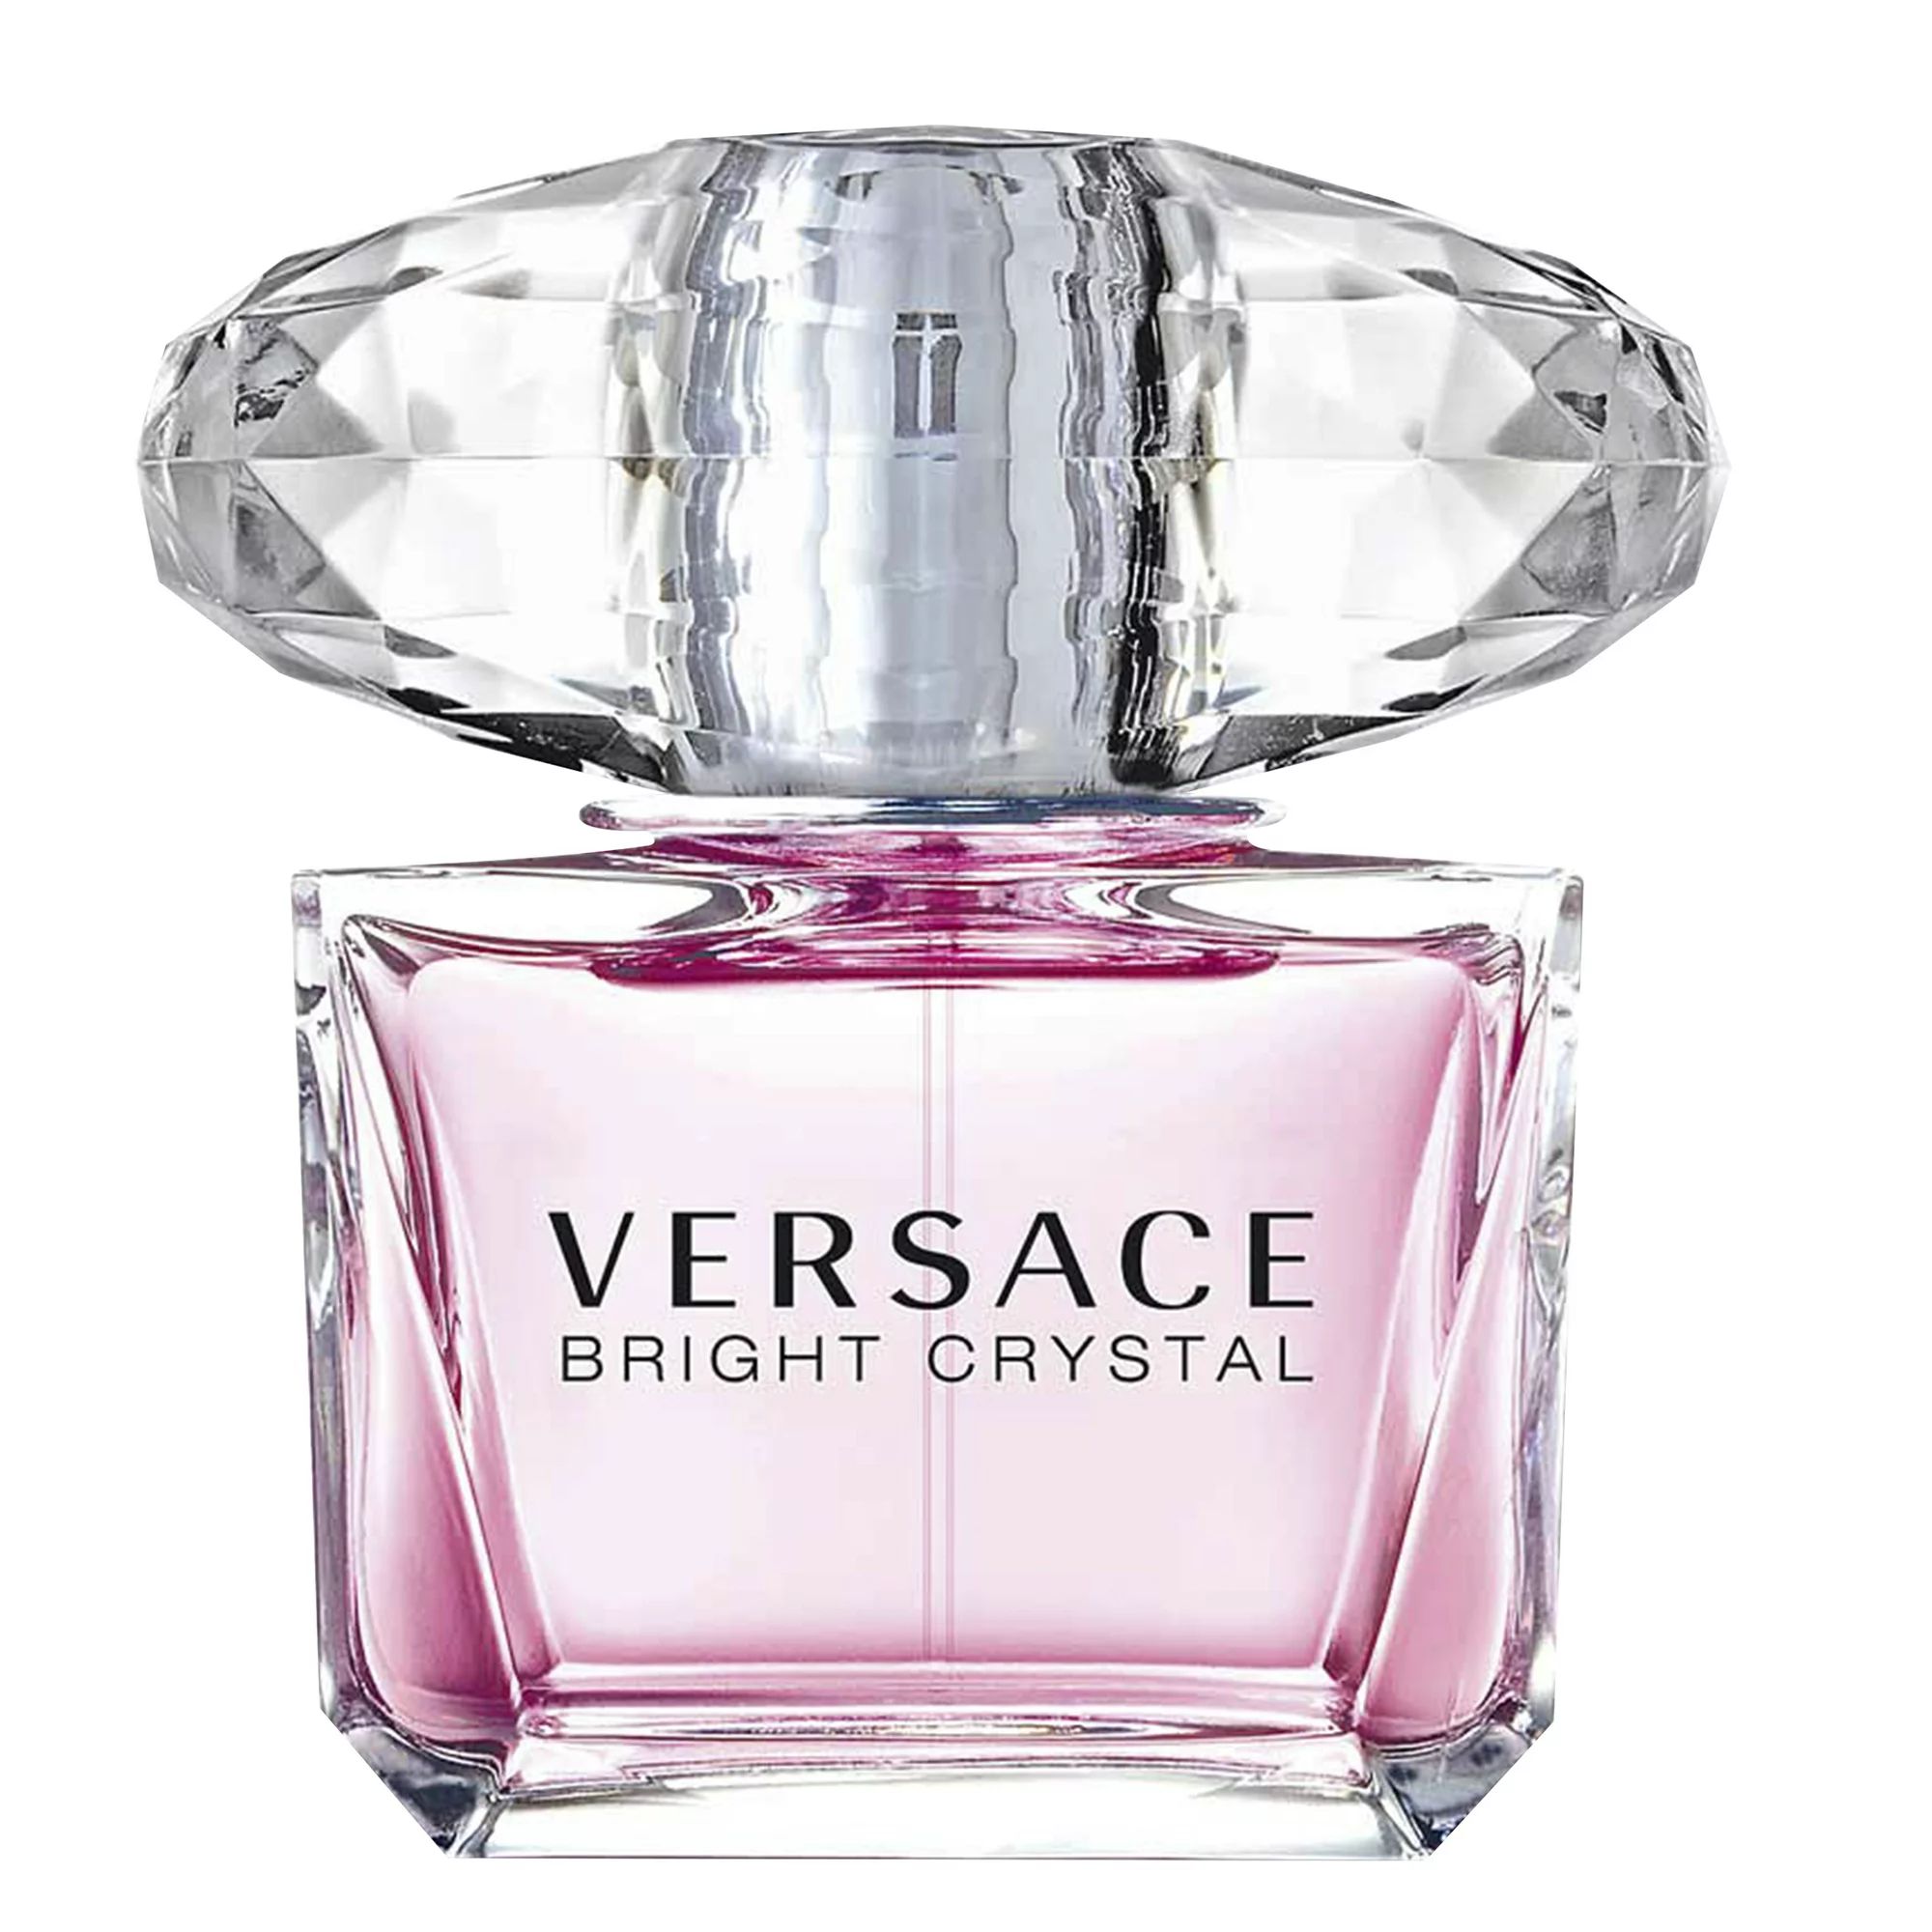 Versace Bright Crystal Eau De Toilette Spray, Perfume for Women, 3 oz | Walmart (US)